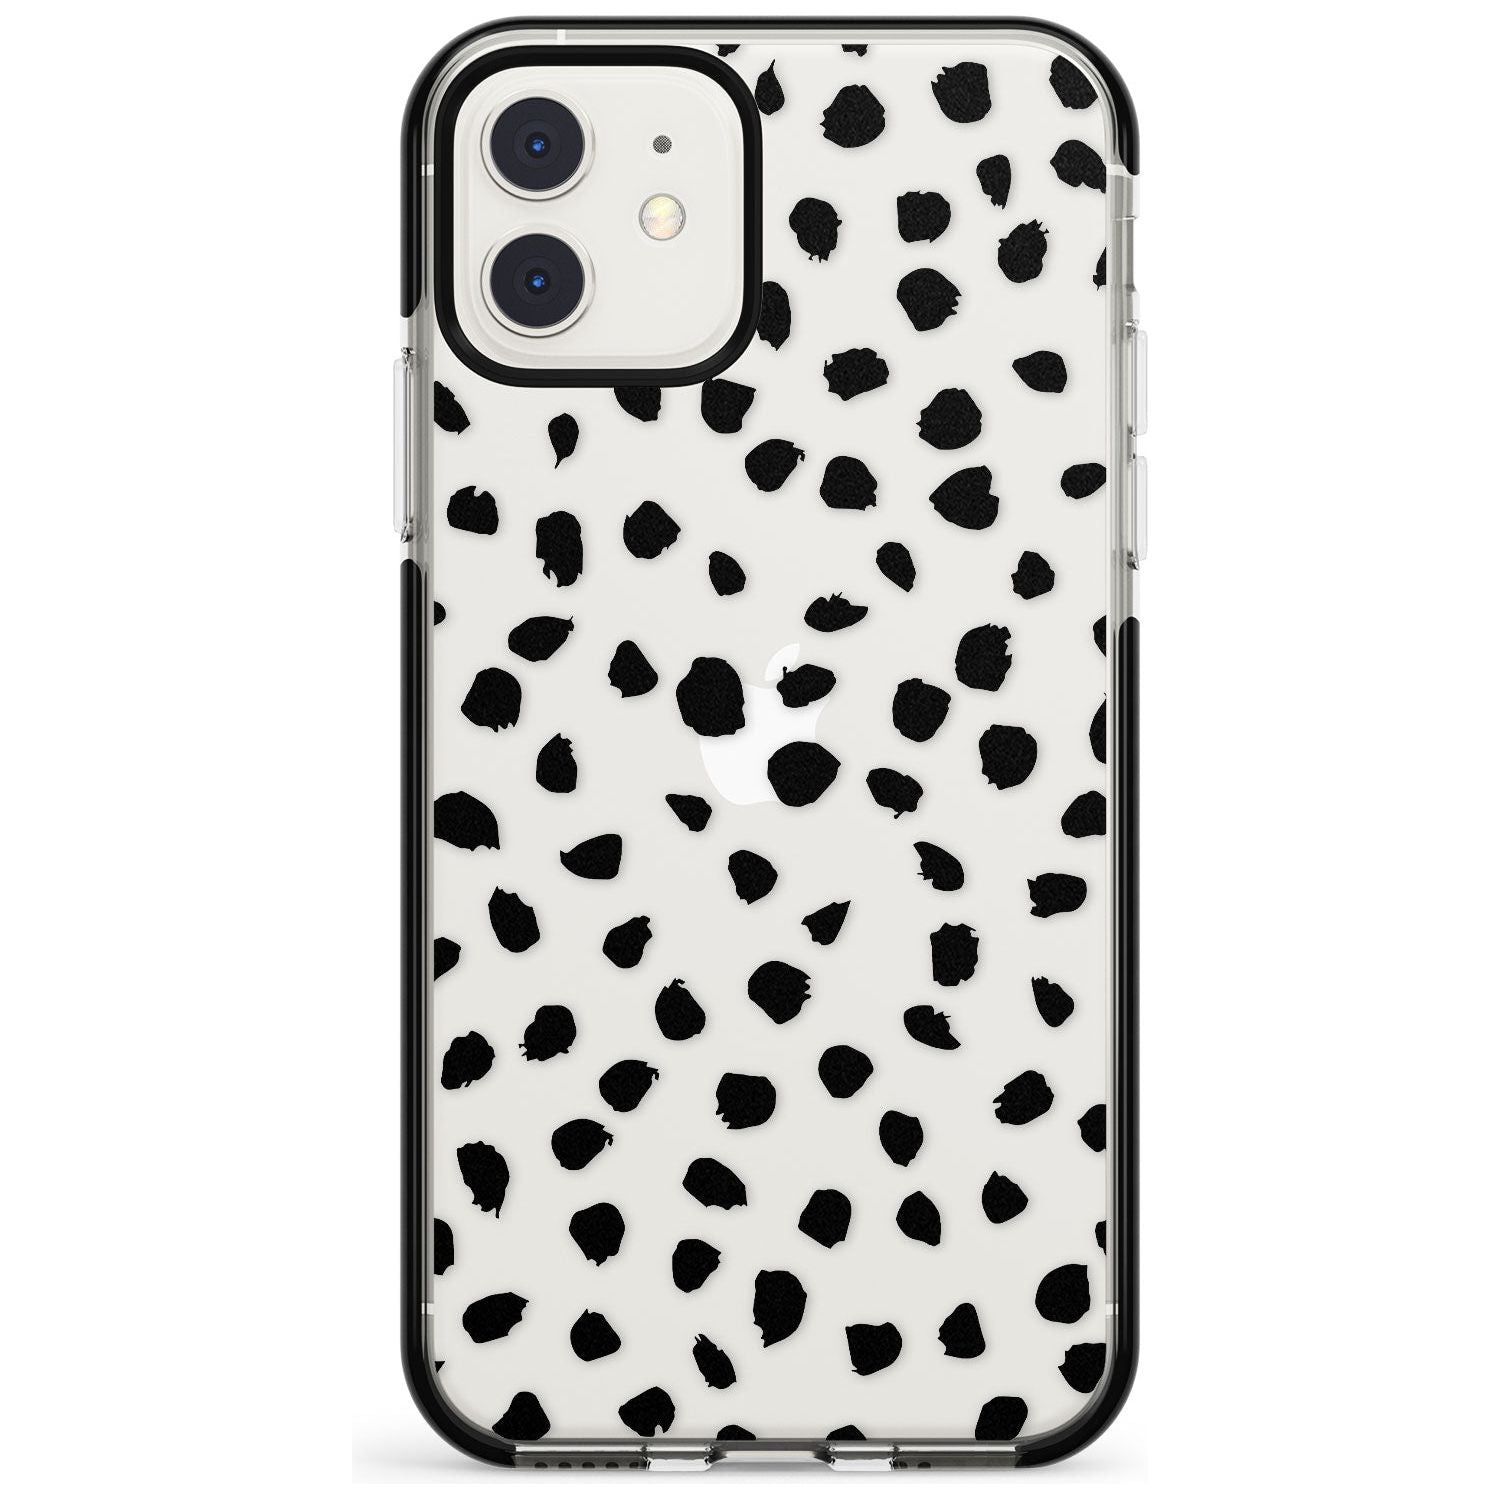 Black on Transparent Dalmatian Polka Dot Spots Black Impact Phone Case for iPhone 11